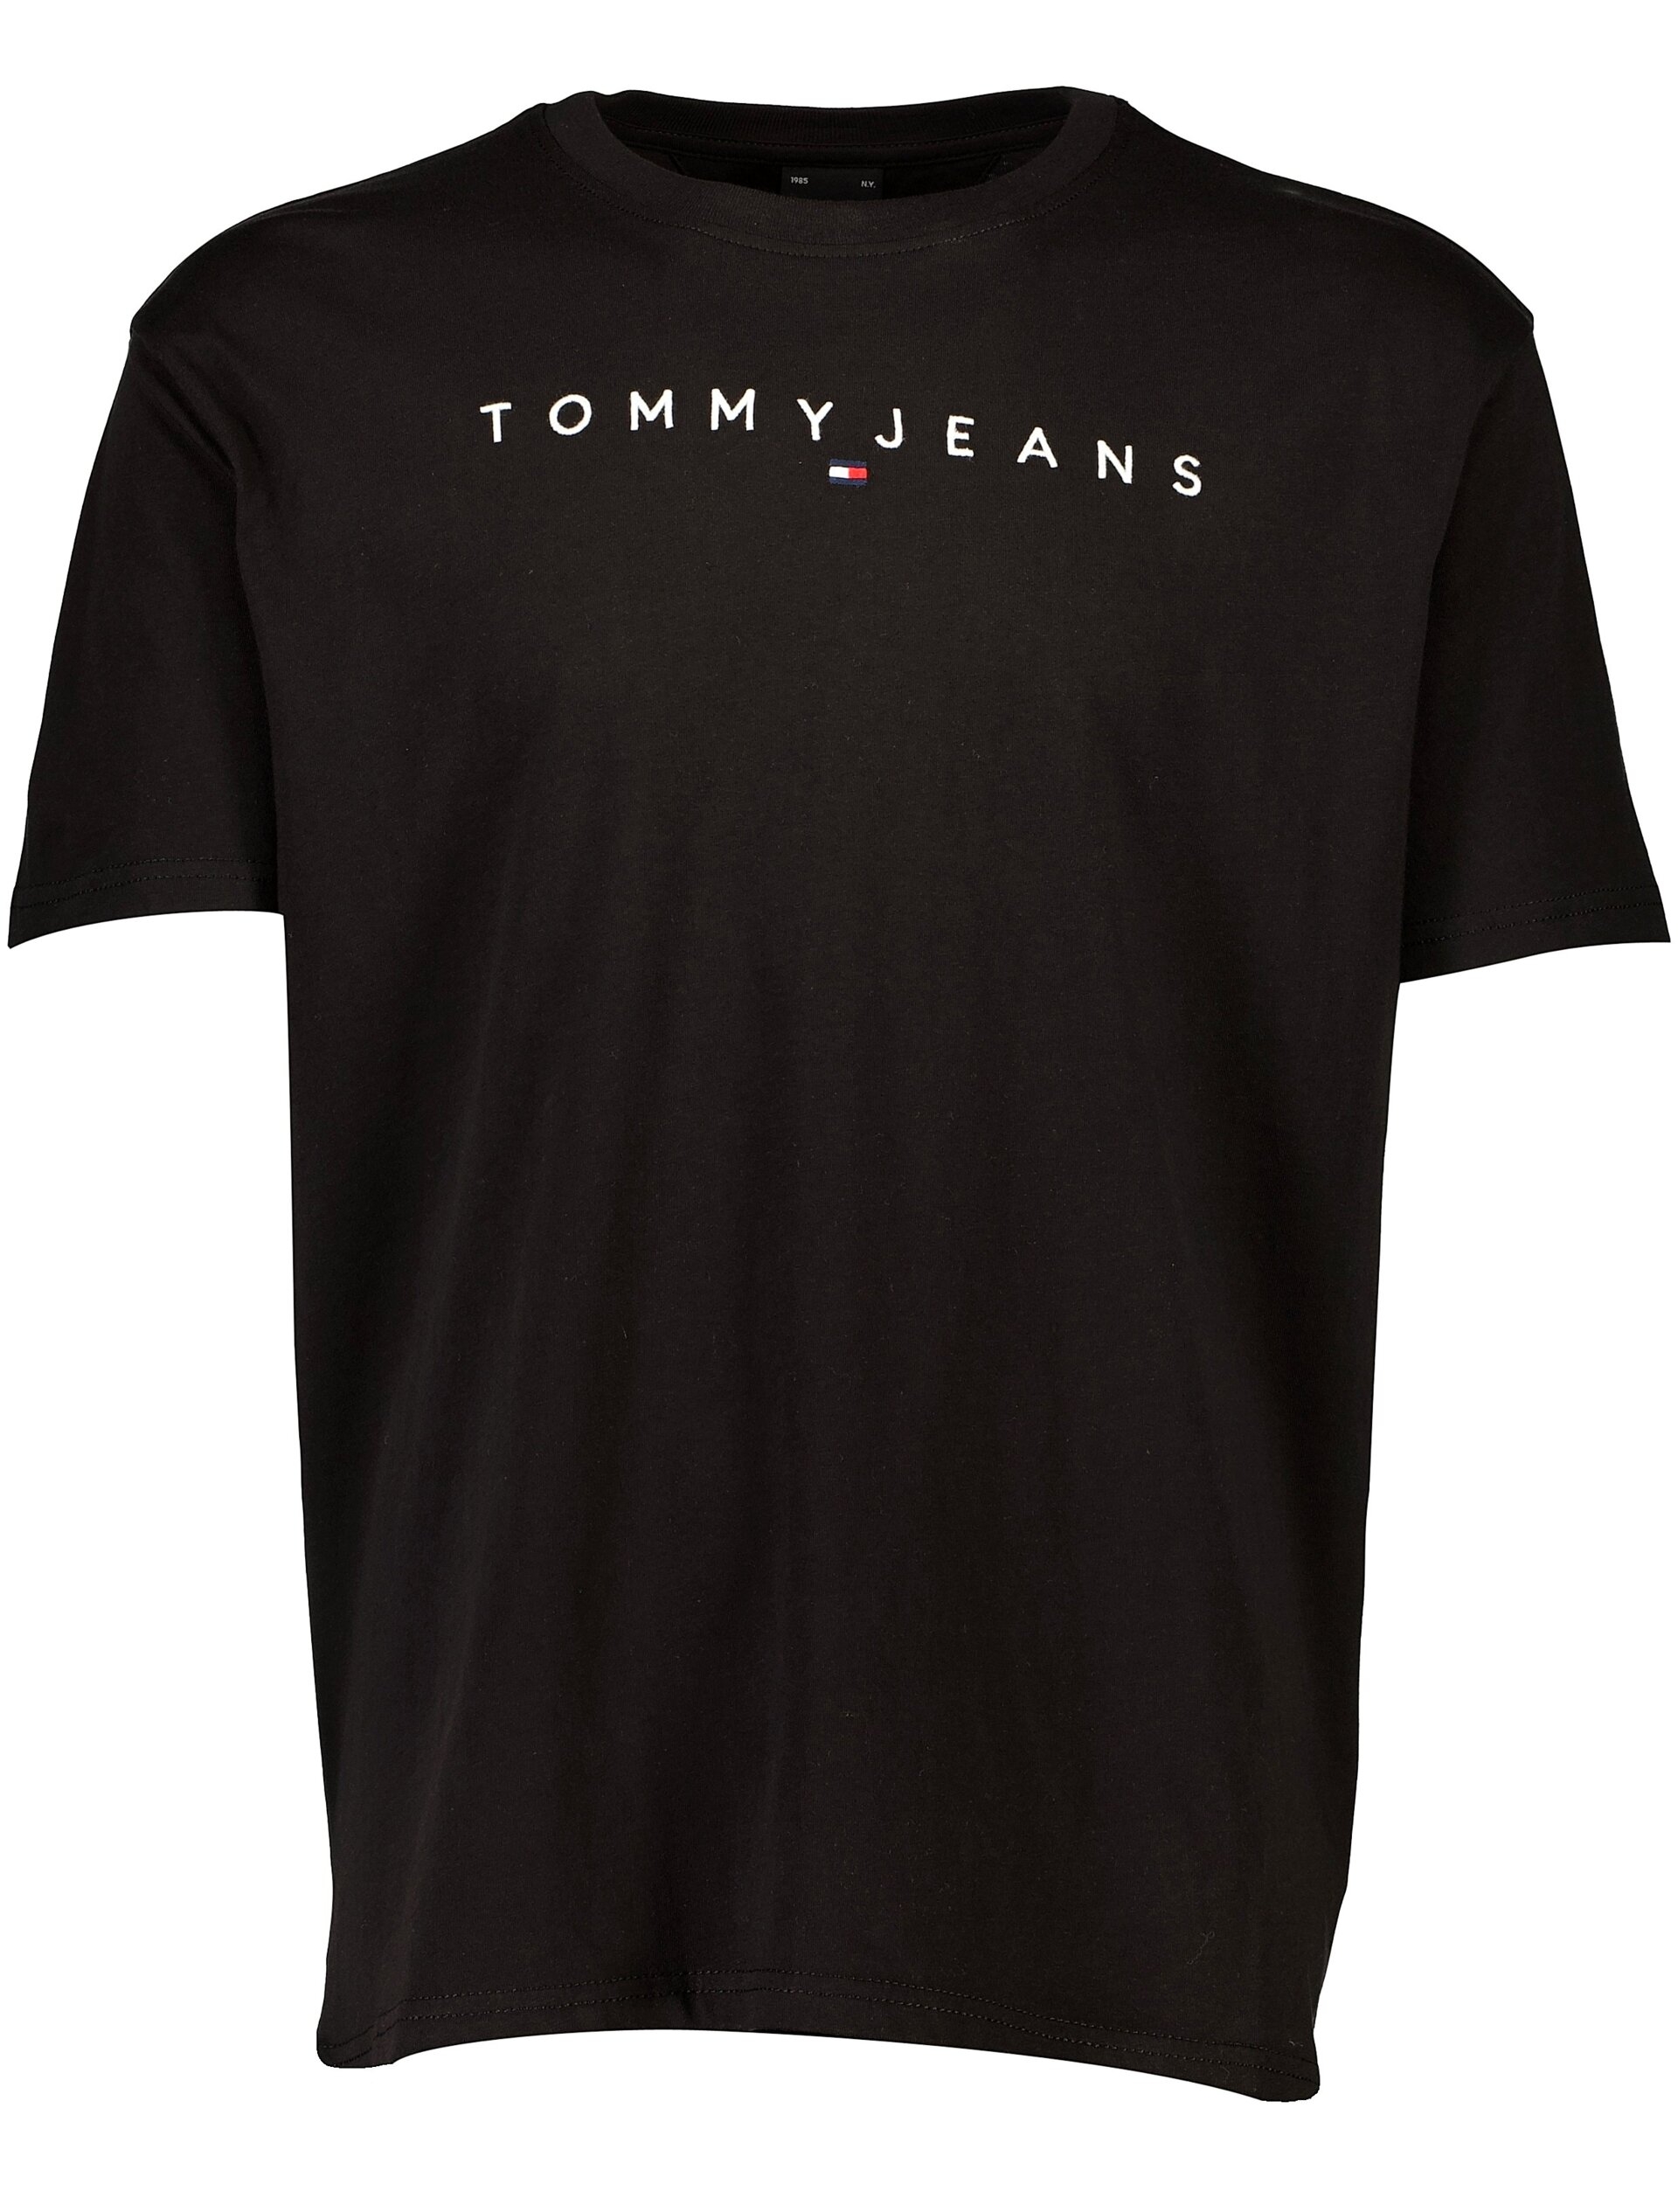 Tommy Jeans T-shirt sort / bds black